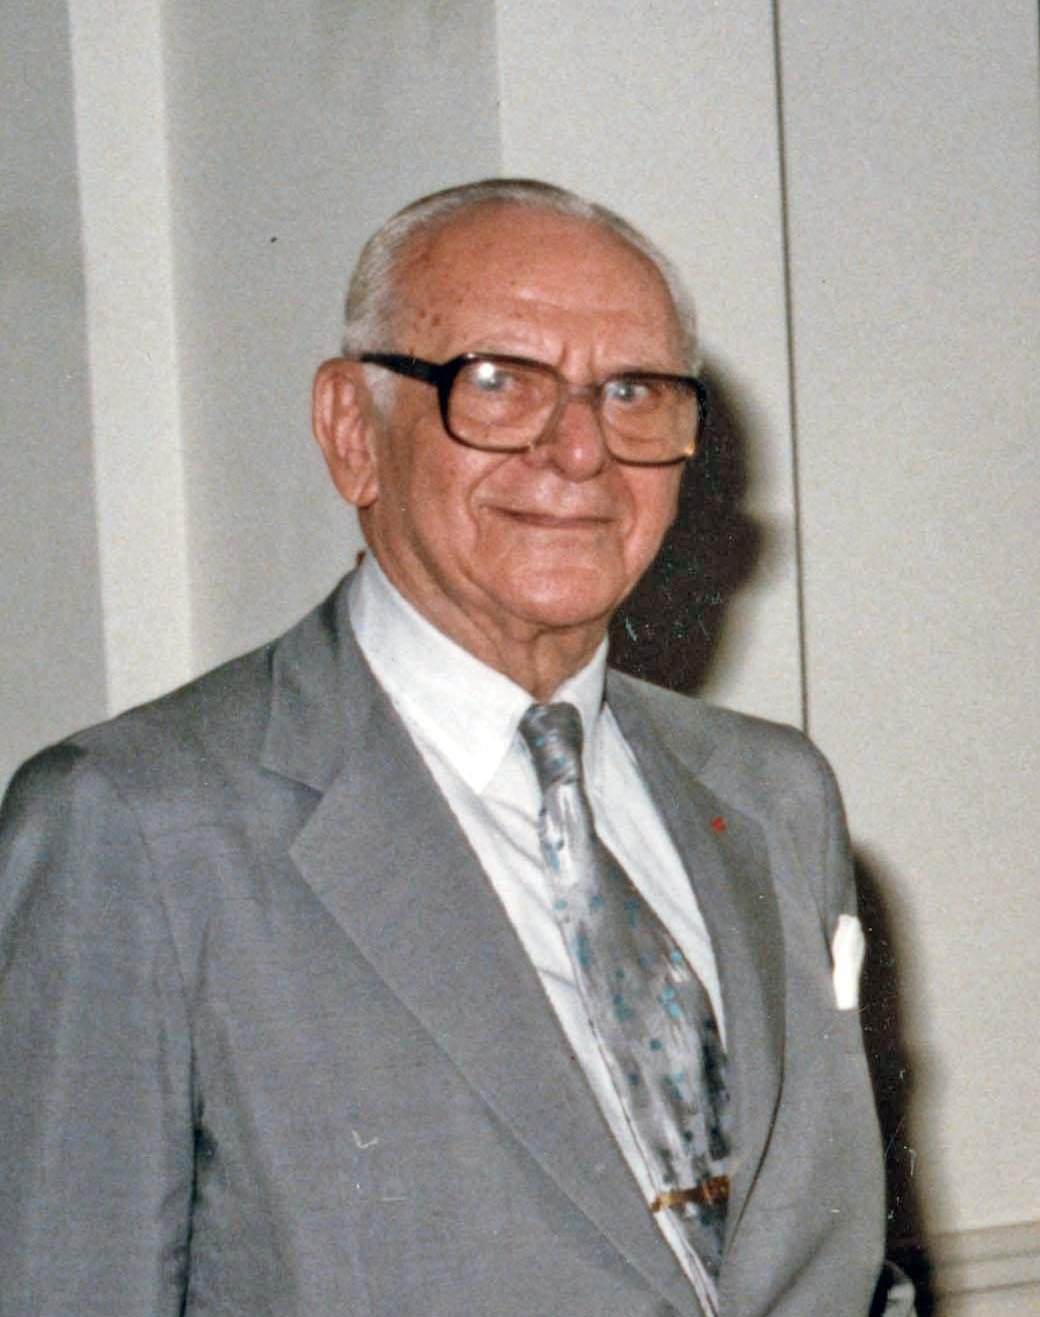 Председатель компании Occidental Petroleum с 1957 по 1990 год Арманд Хаммер. Фото: FDR Presidential Library & Museum